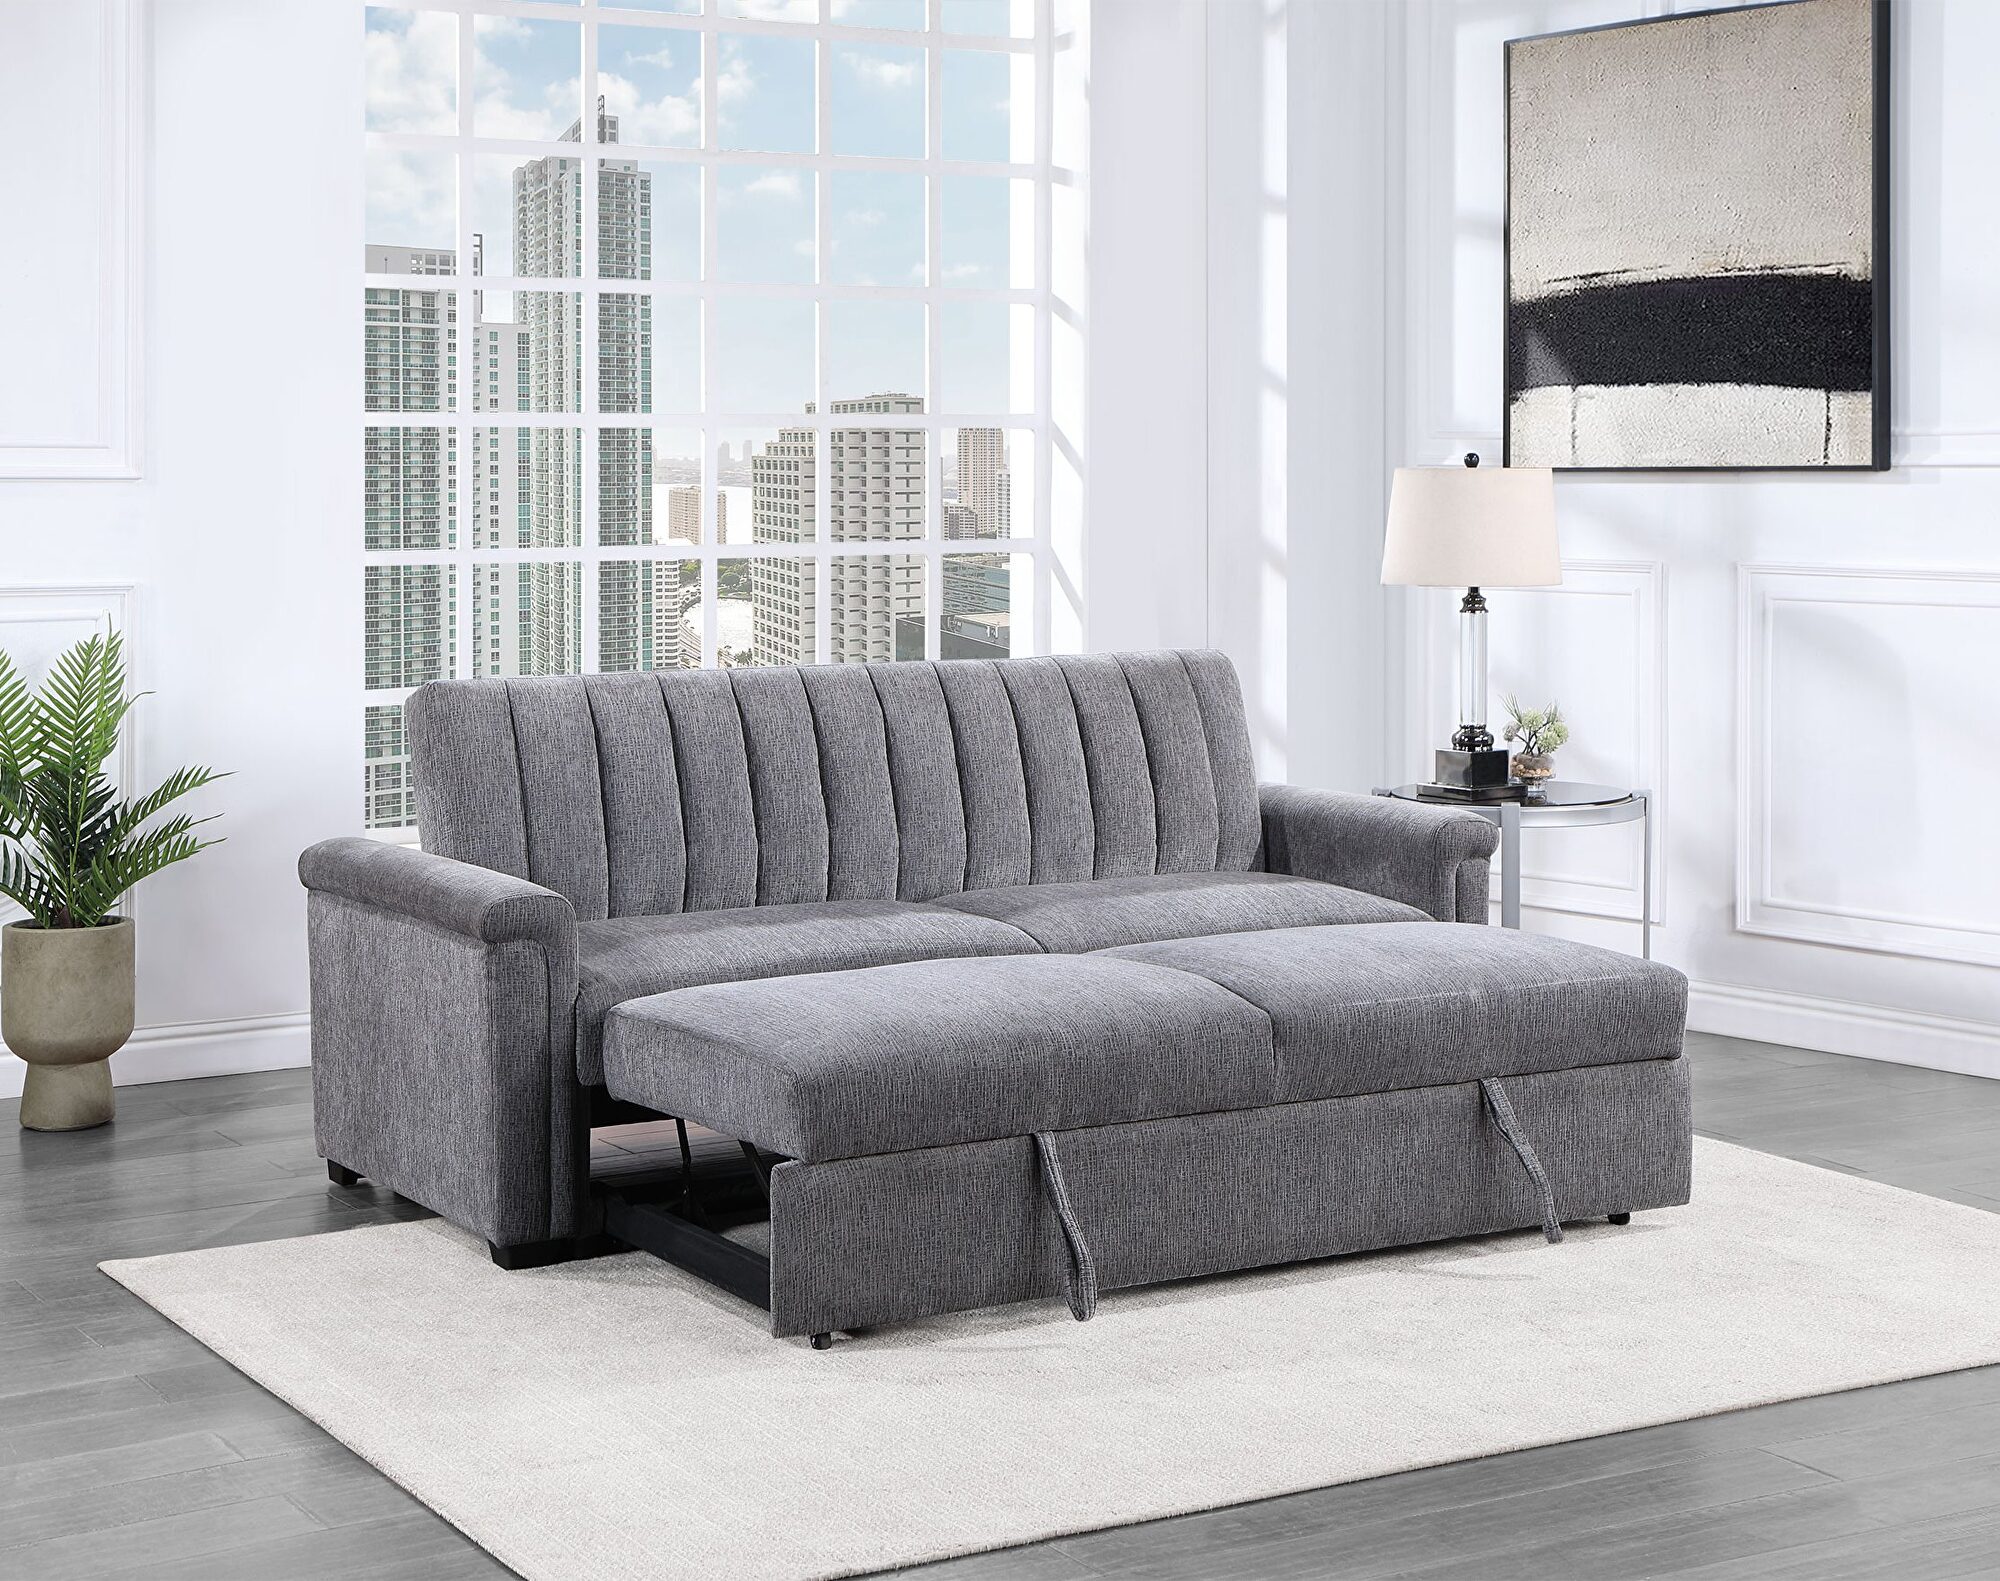 Global G0201 Gray Sofa Bed U0201-DARK GREY-PULL OUT SOFA BED | Comfyco